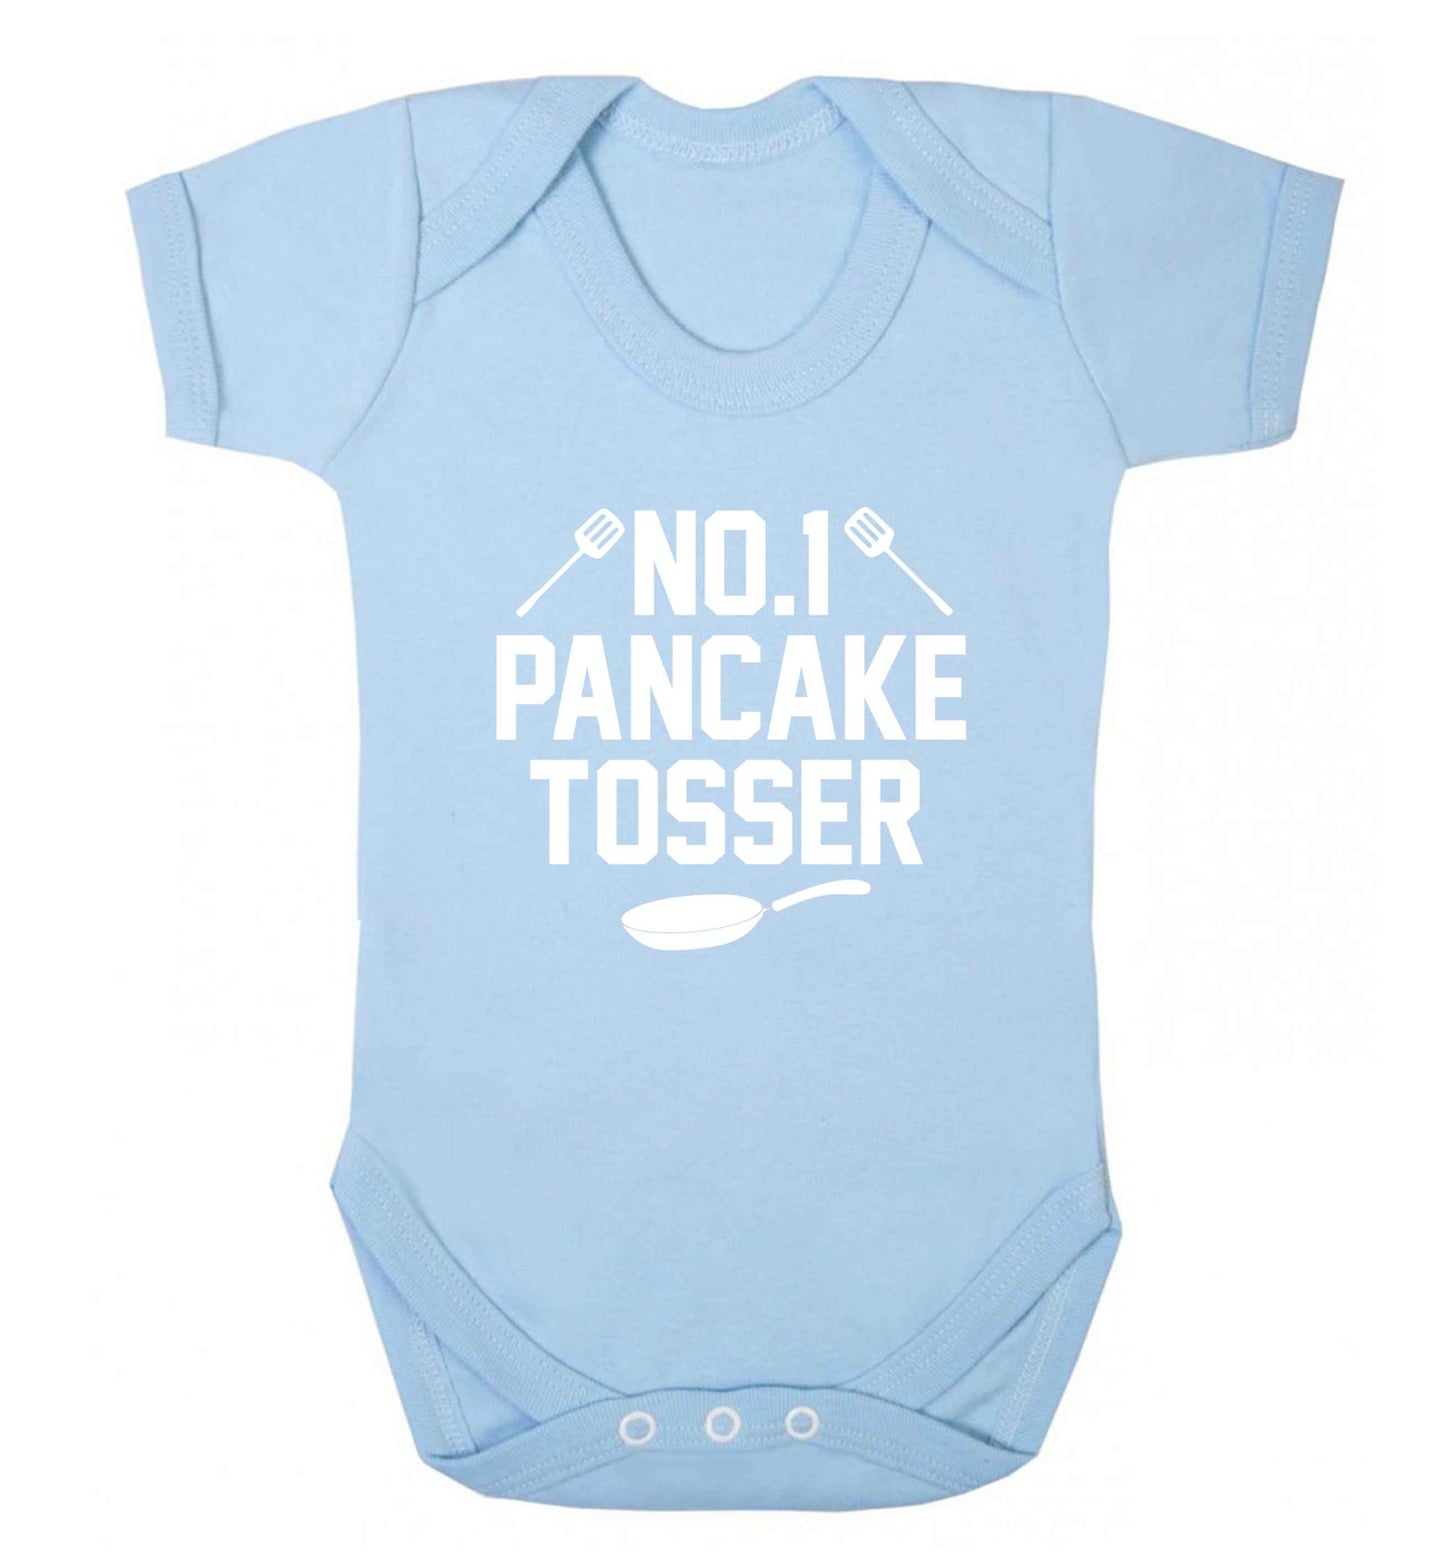 No.1 Pancake tosser baby vest pale blue 18-24 months